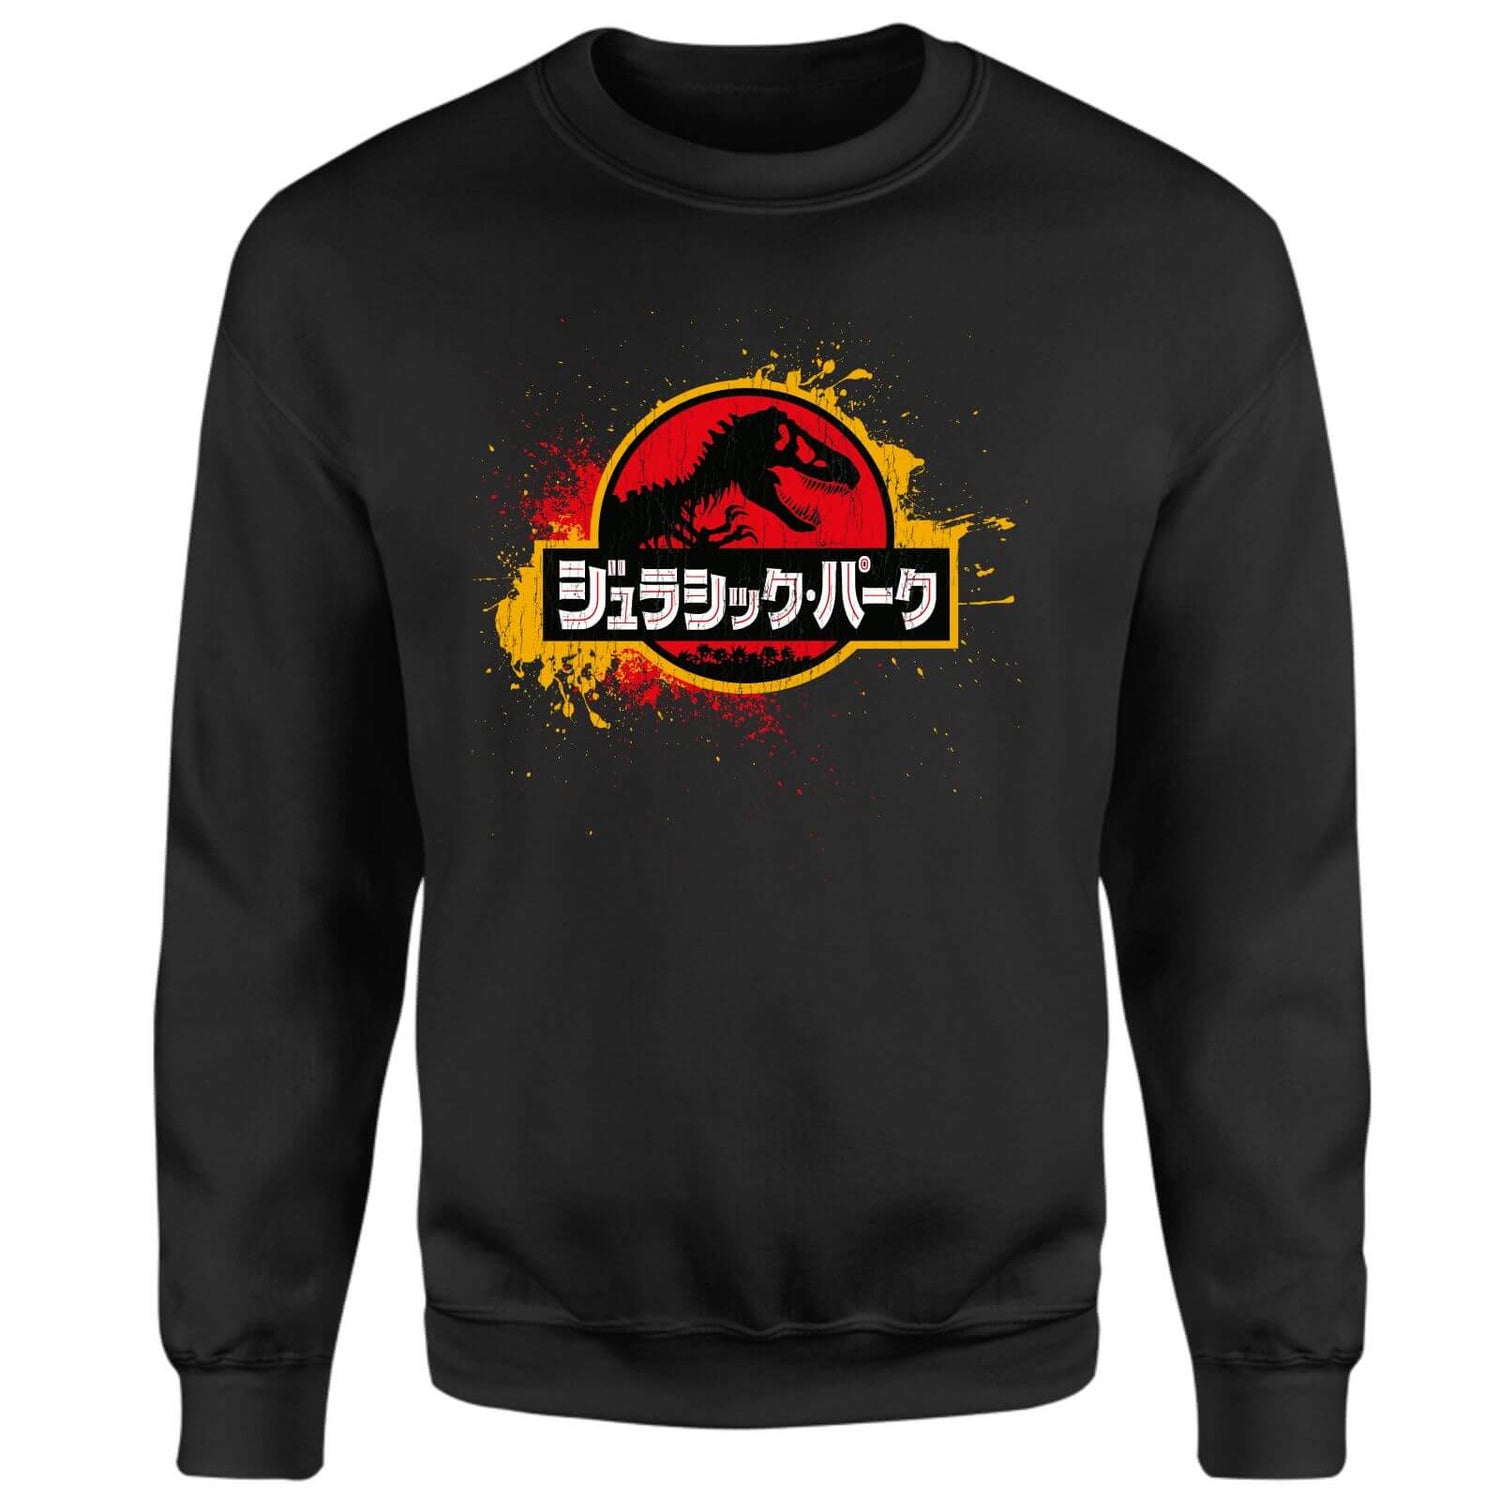 Jurassic Park Sweatshirt - Black